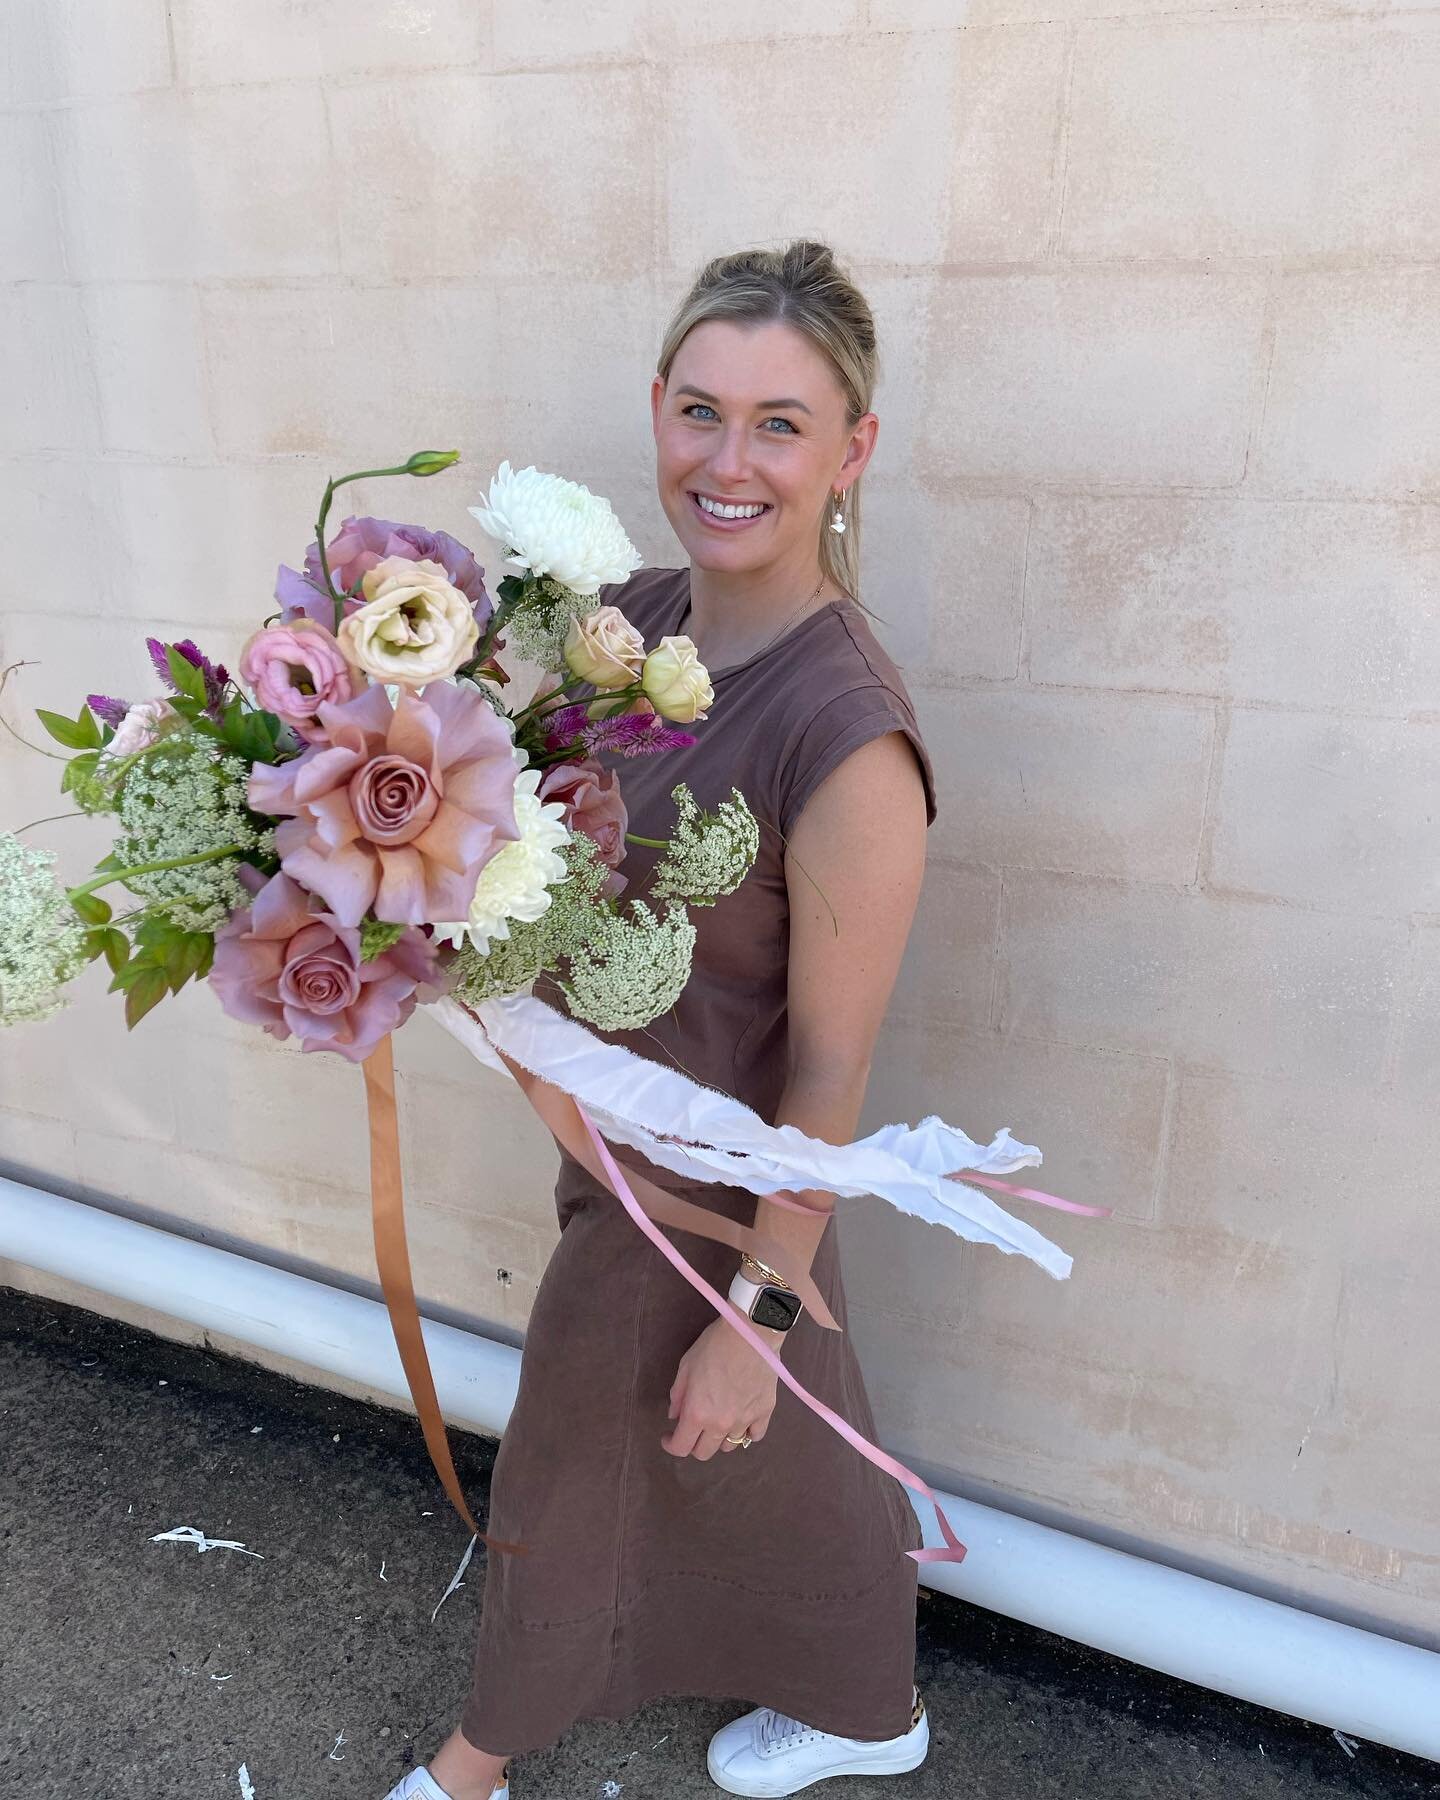 Wedding blooms! Block course creating with @flowerstoimpress 
💕🌸✨💍
#weddingblooms #flowers #florist #weddingflorist #townsville #flowerstoimpressschooloffloristrytownsville